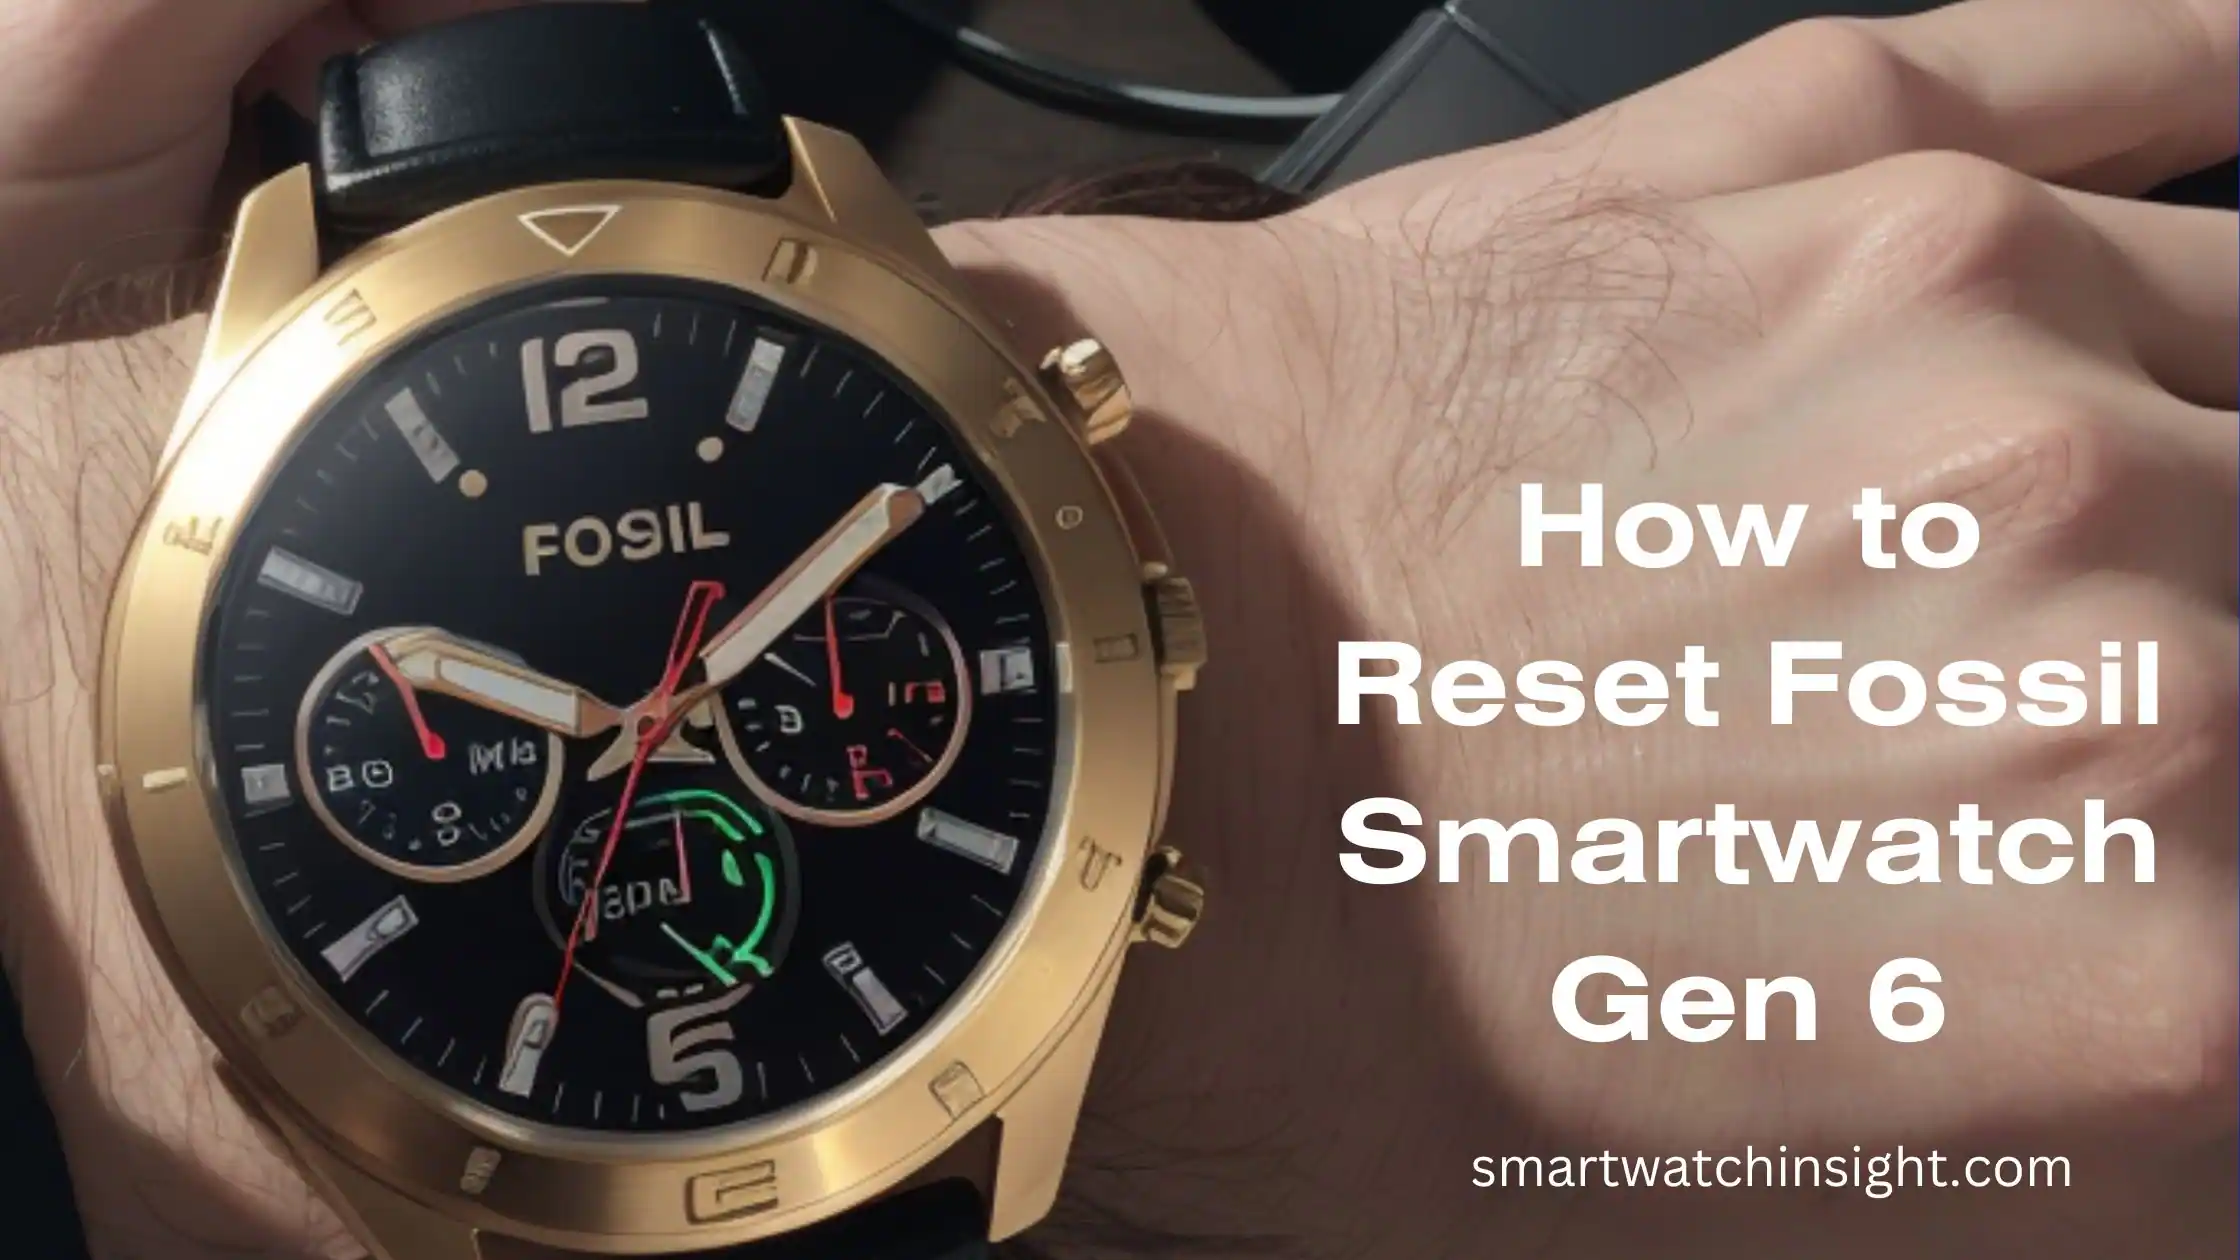 How to Reset Fossil Smartwatch Gen 6